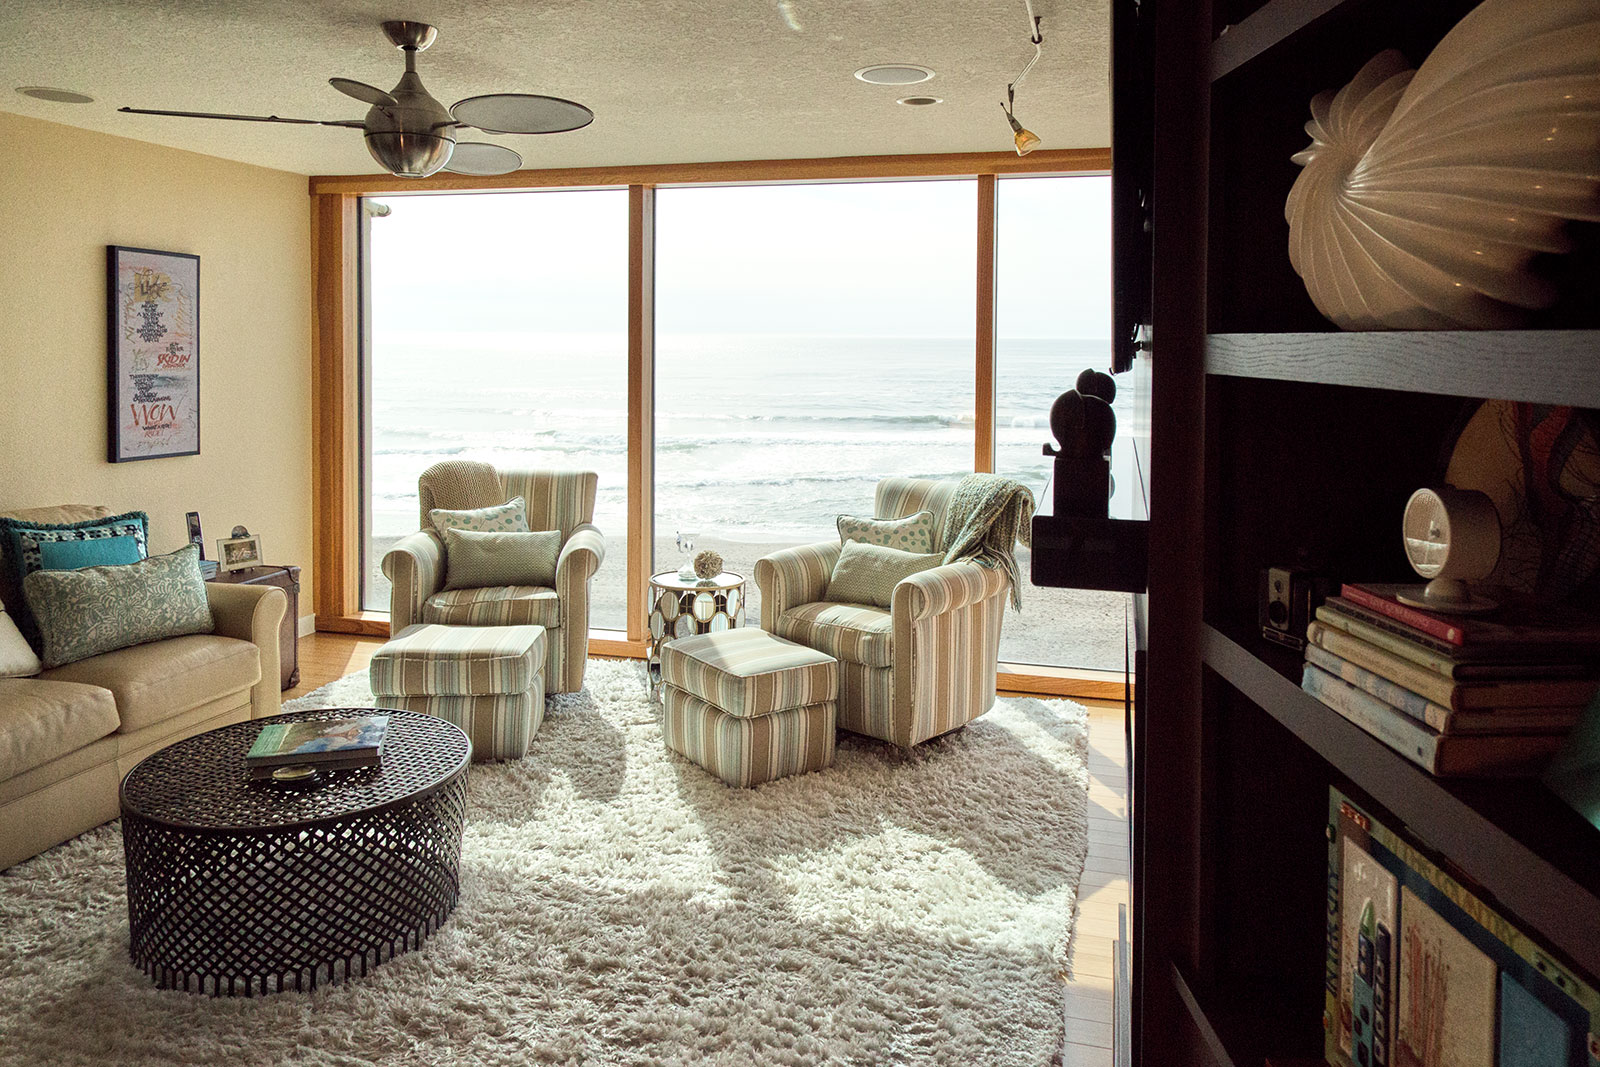 A modern, coastal living room condo renovation and interior design project. Rebecca Olsen Designs, Salem, OR